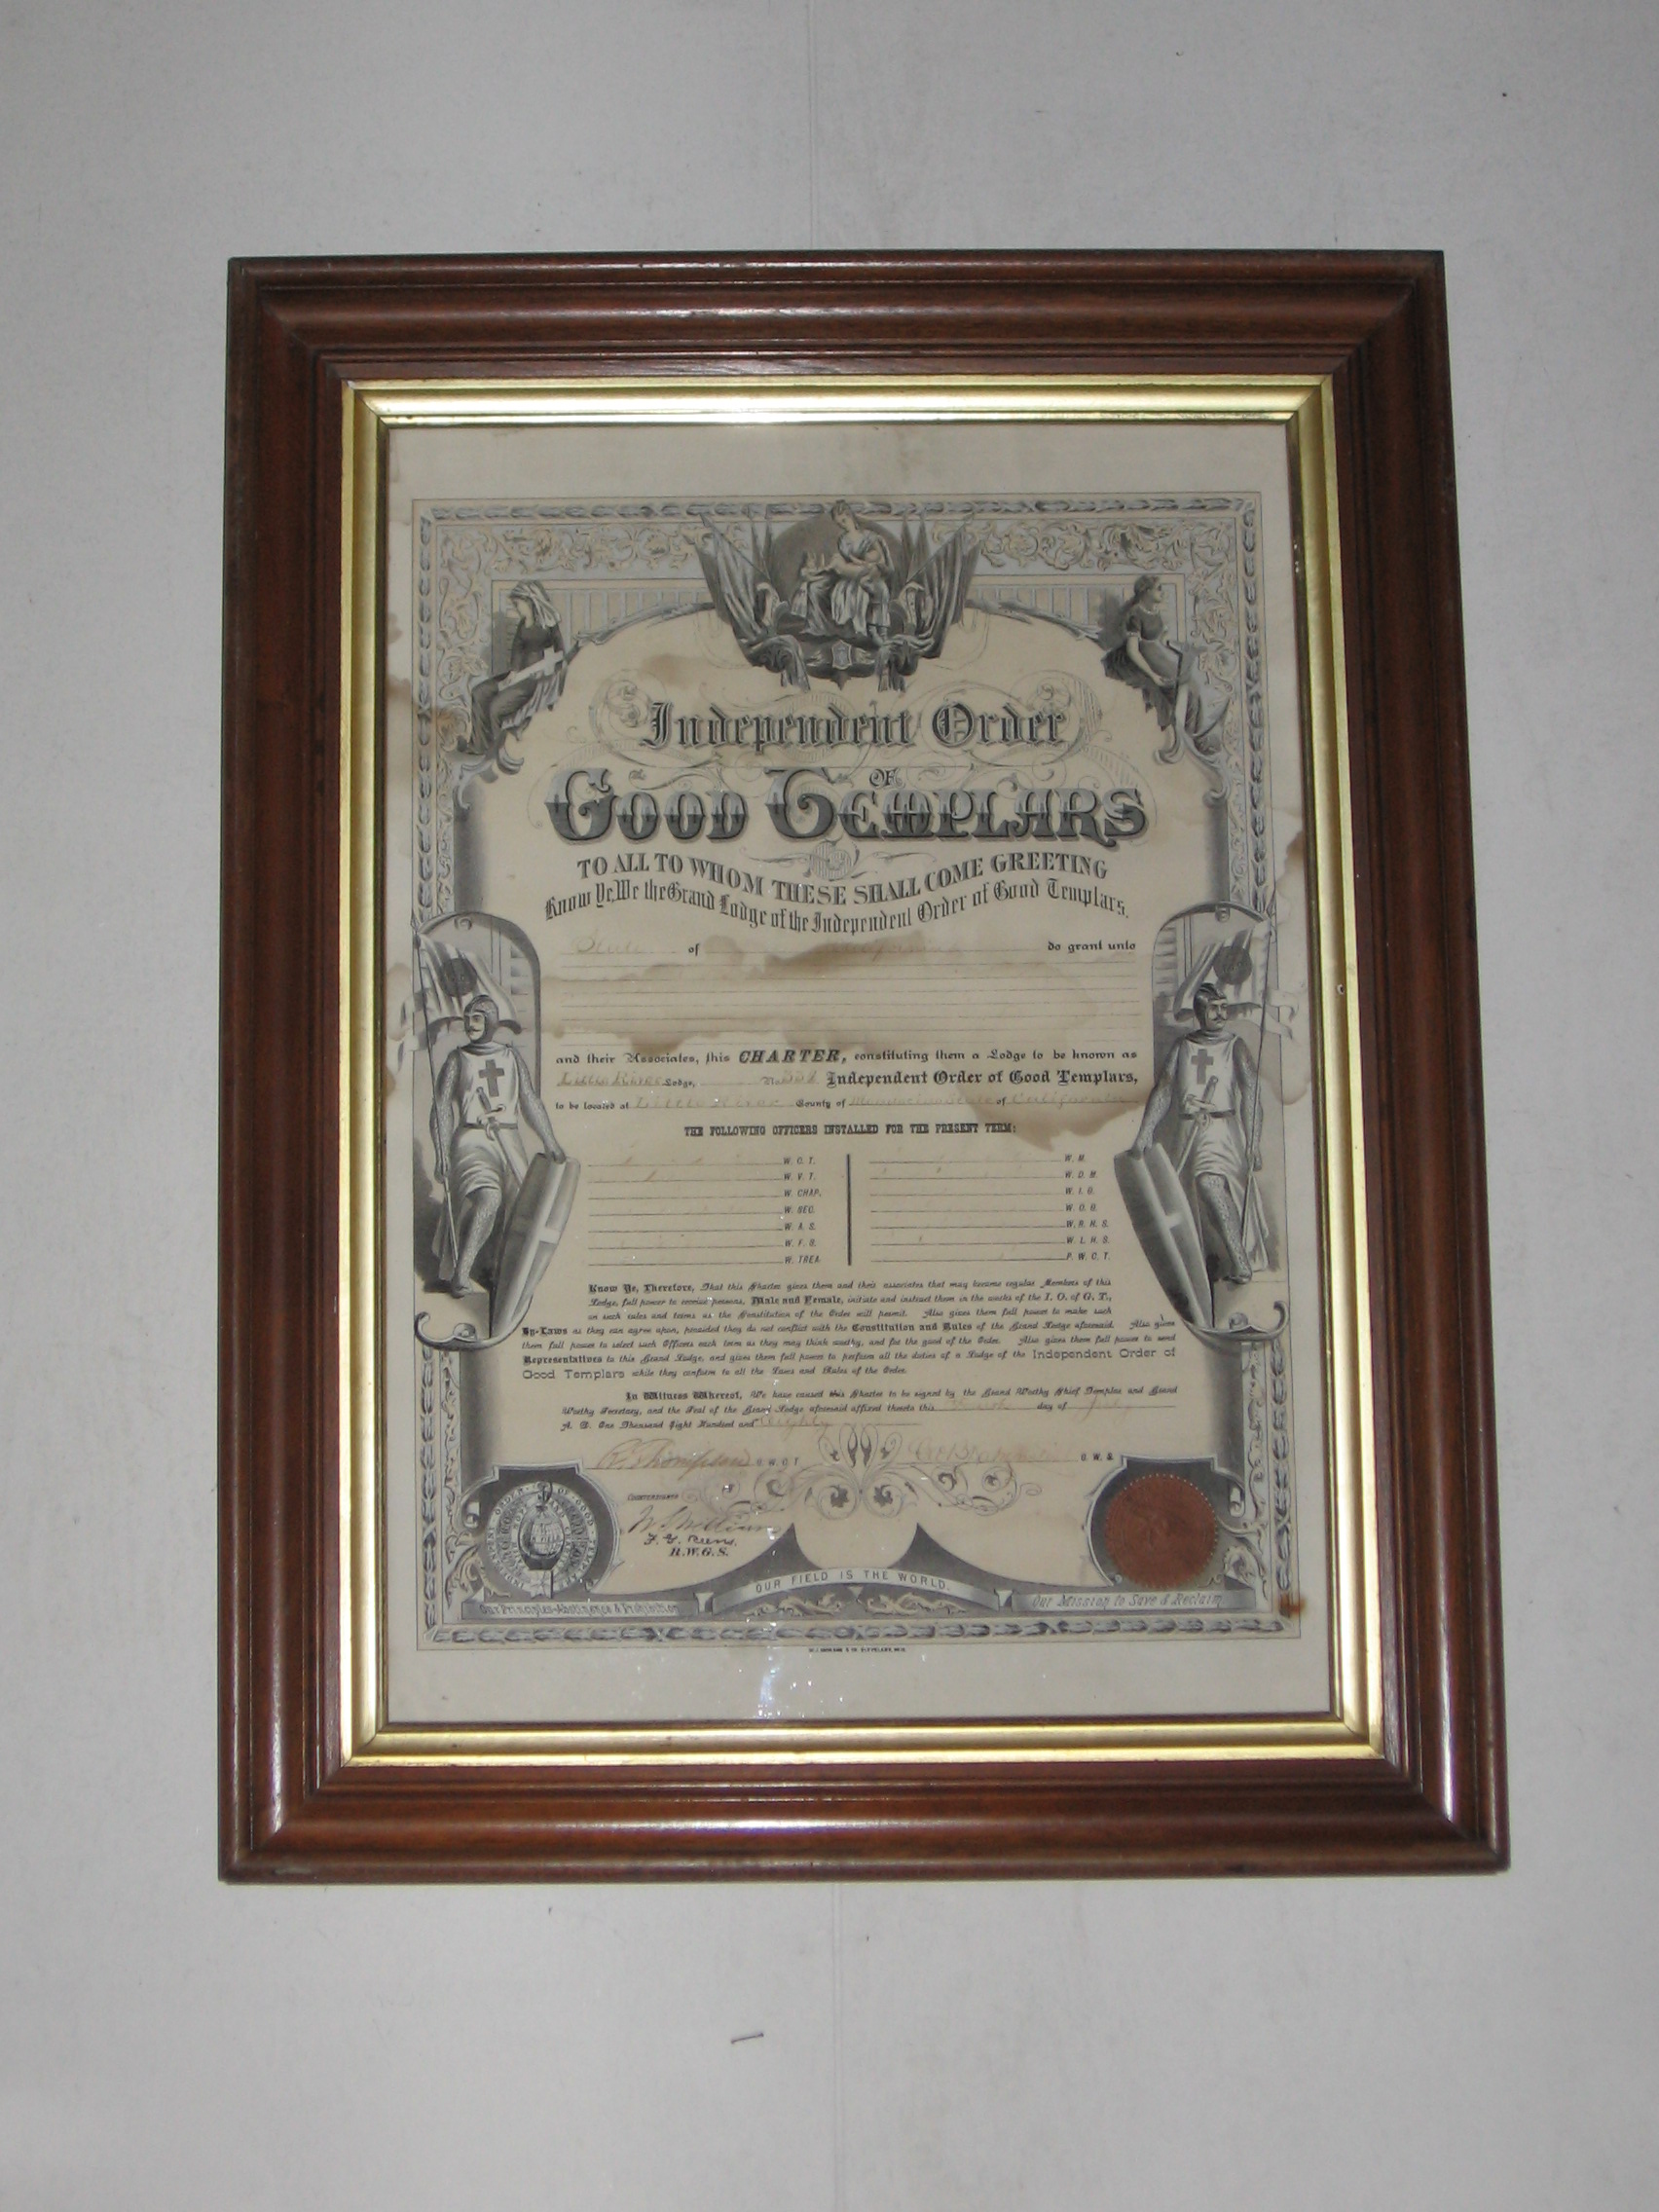 01 International Order of Good Templars Charter